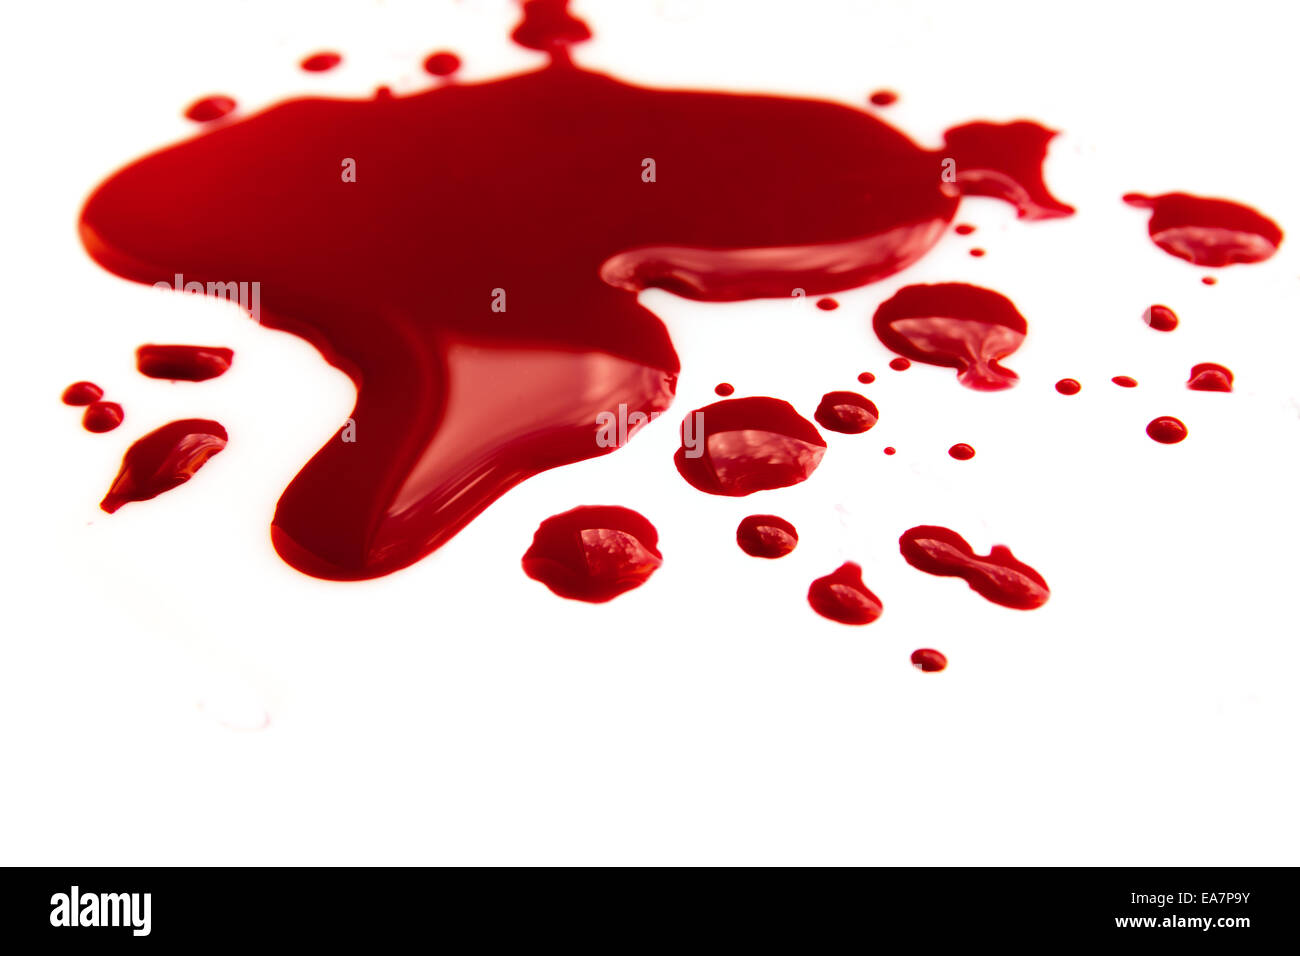 Blood stains (puddle) isolated on white background close up, horizontal Stock Photo